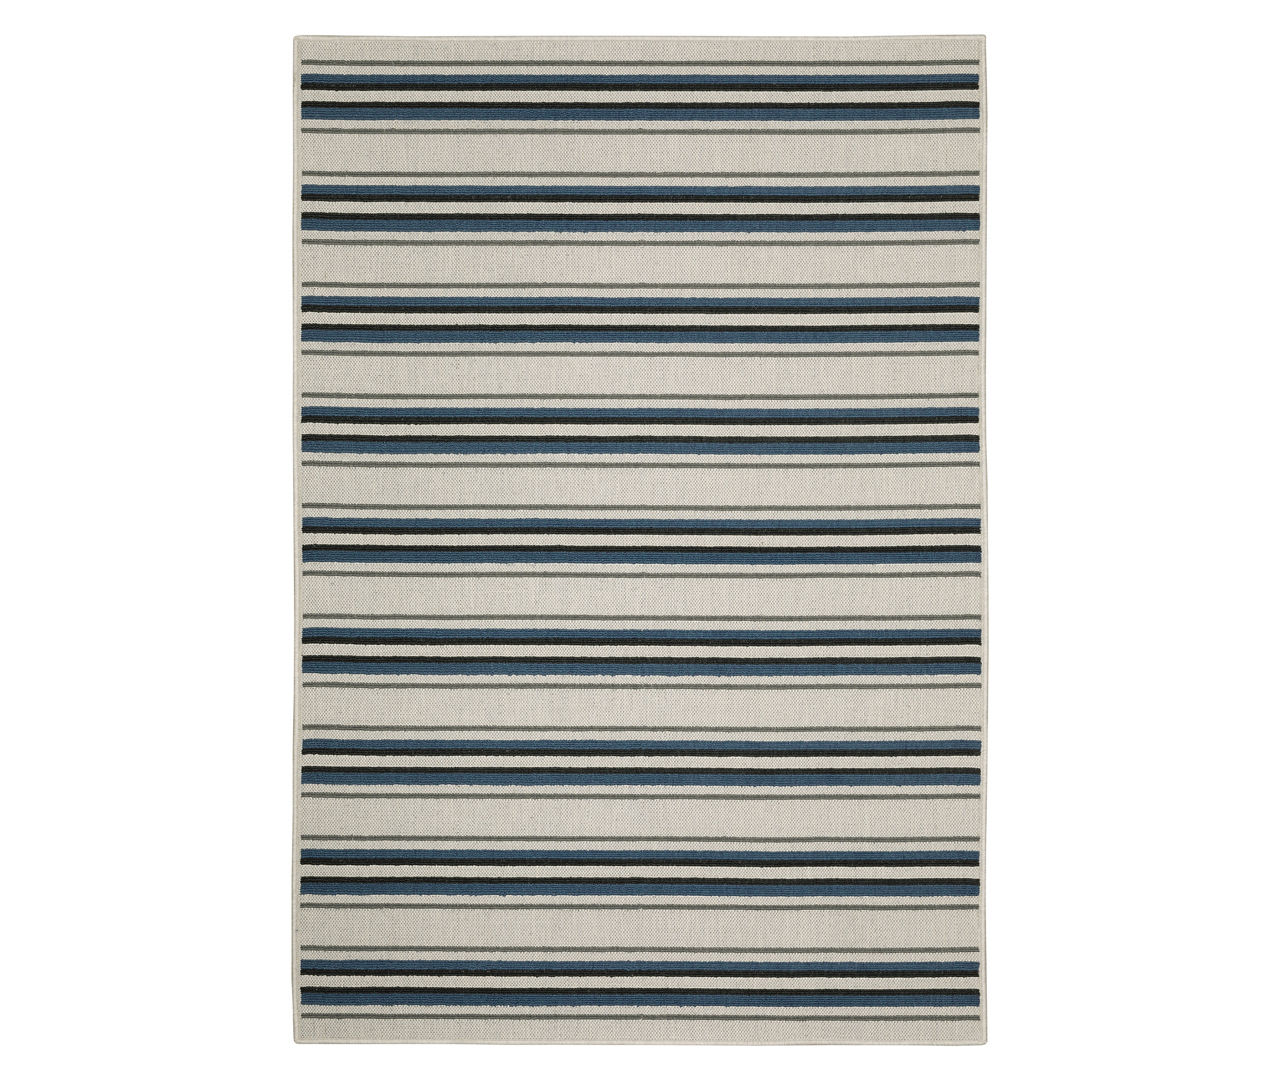 Torie Beige & Blue Stripe Outdoor Area Rug, (3.3' x 5')